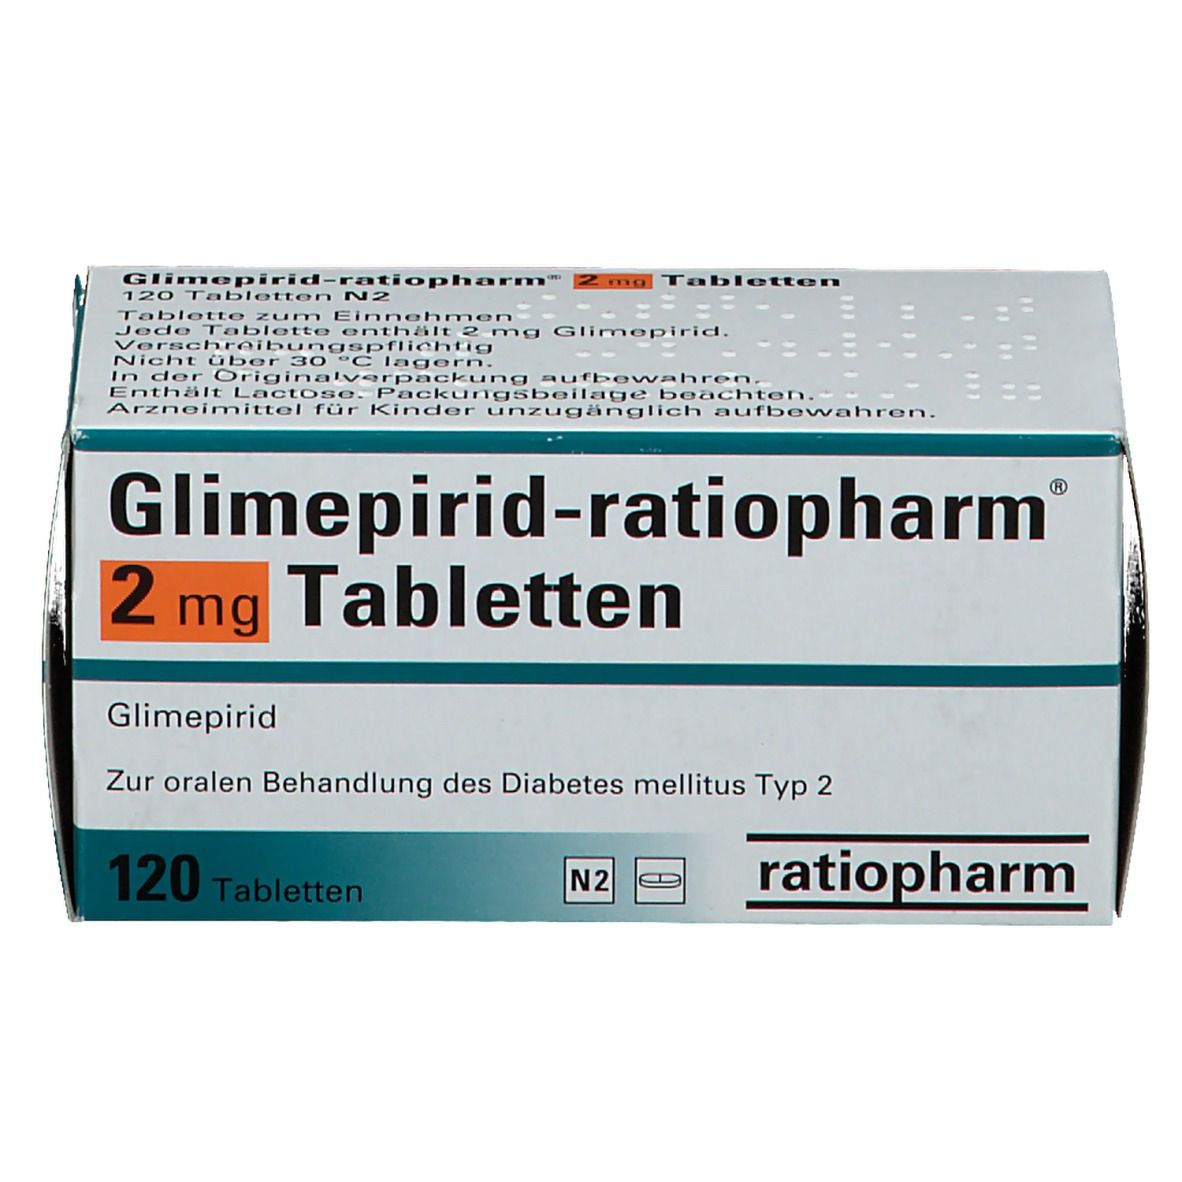 Glimepirid-ratiopharm® 2 mg